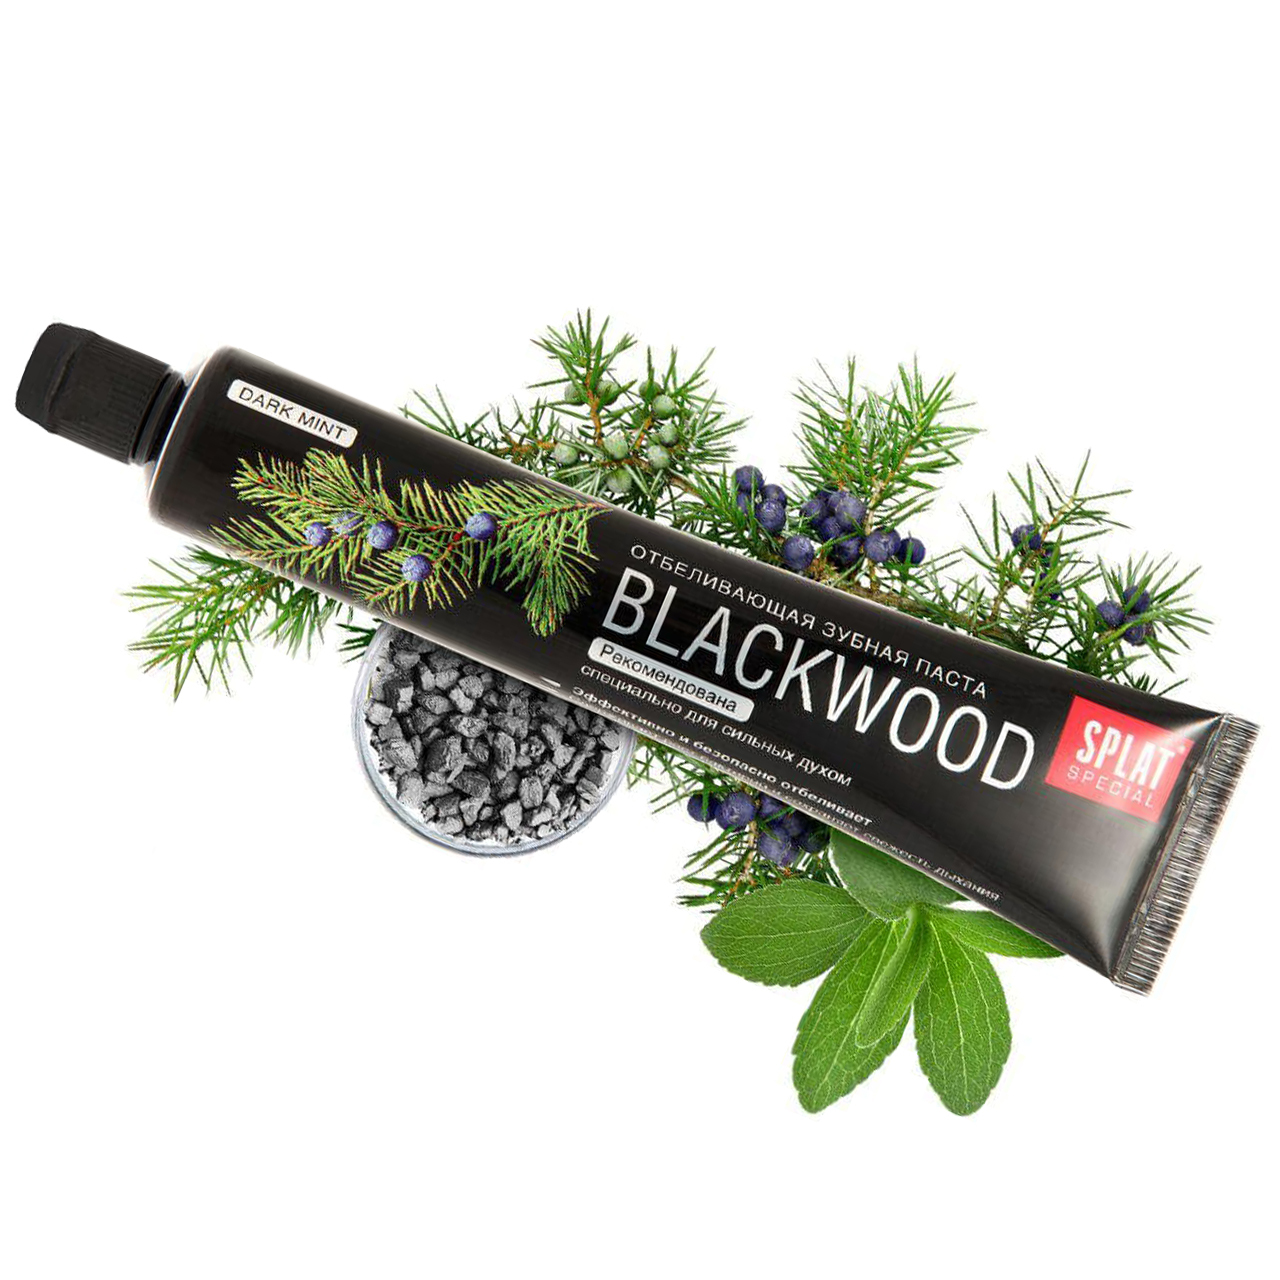 Black Toothpaste with birch carbon&nbsp;